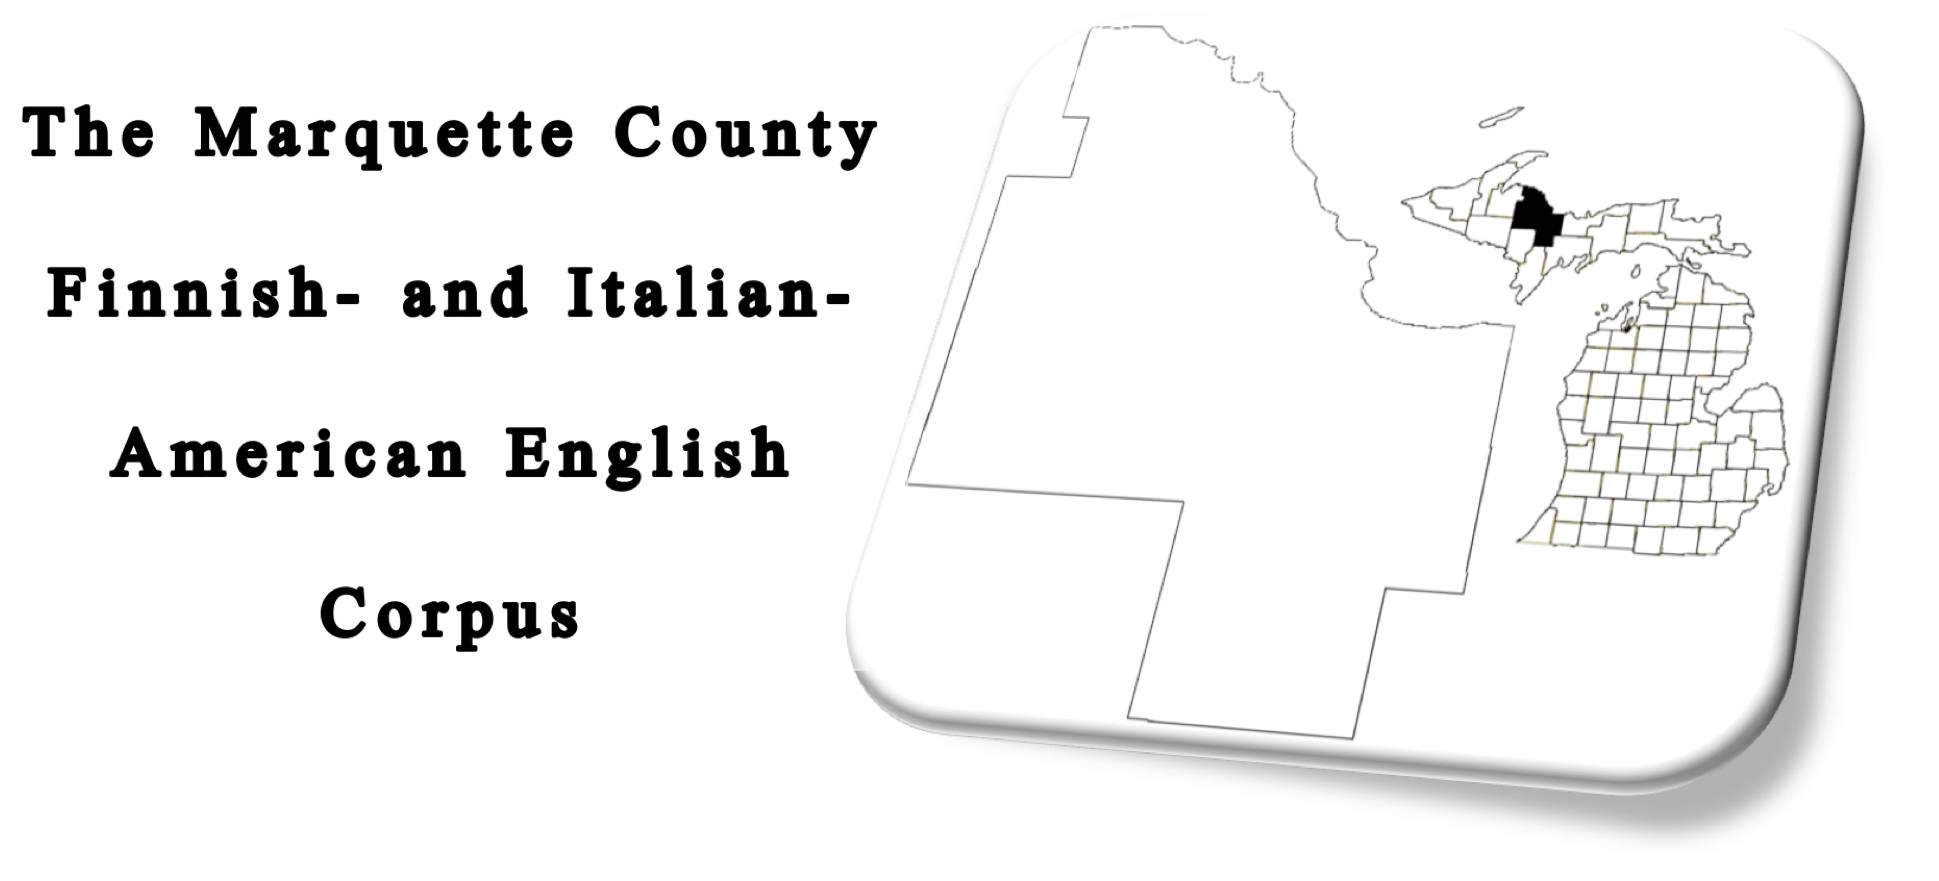 The Marquette County Finnish- and Italian-American English Corpus